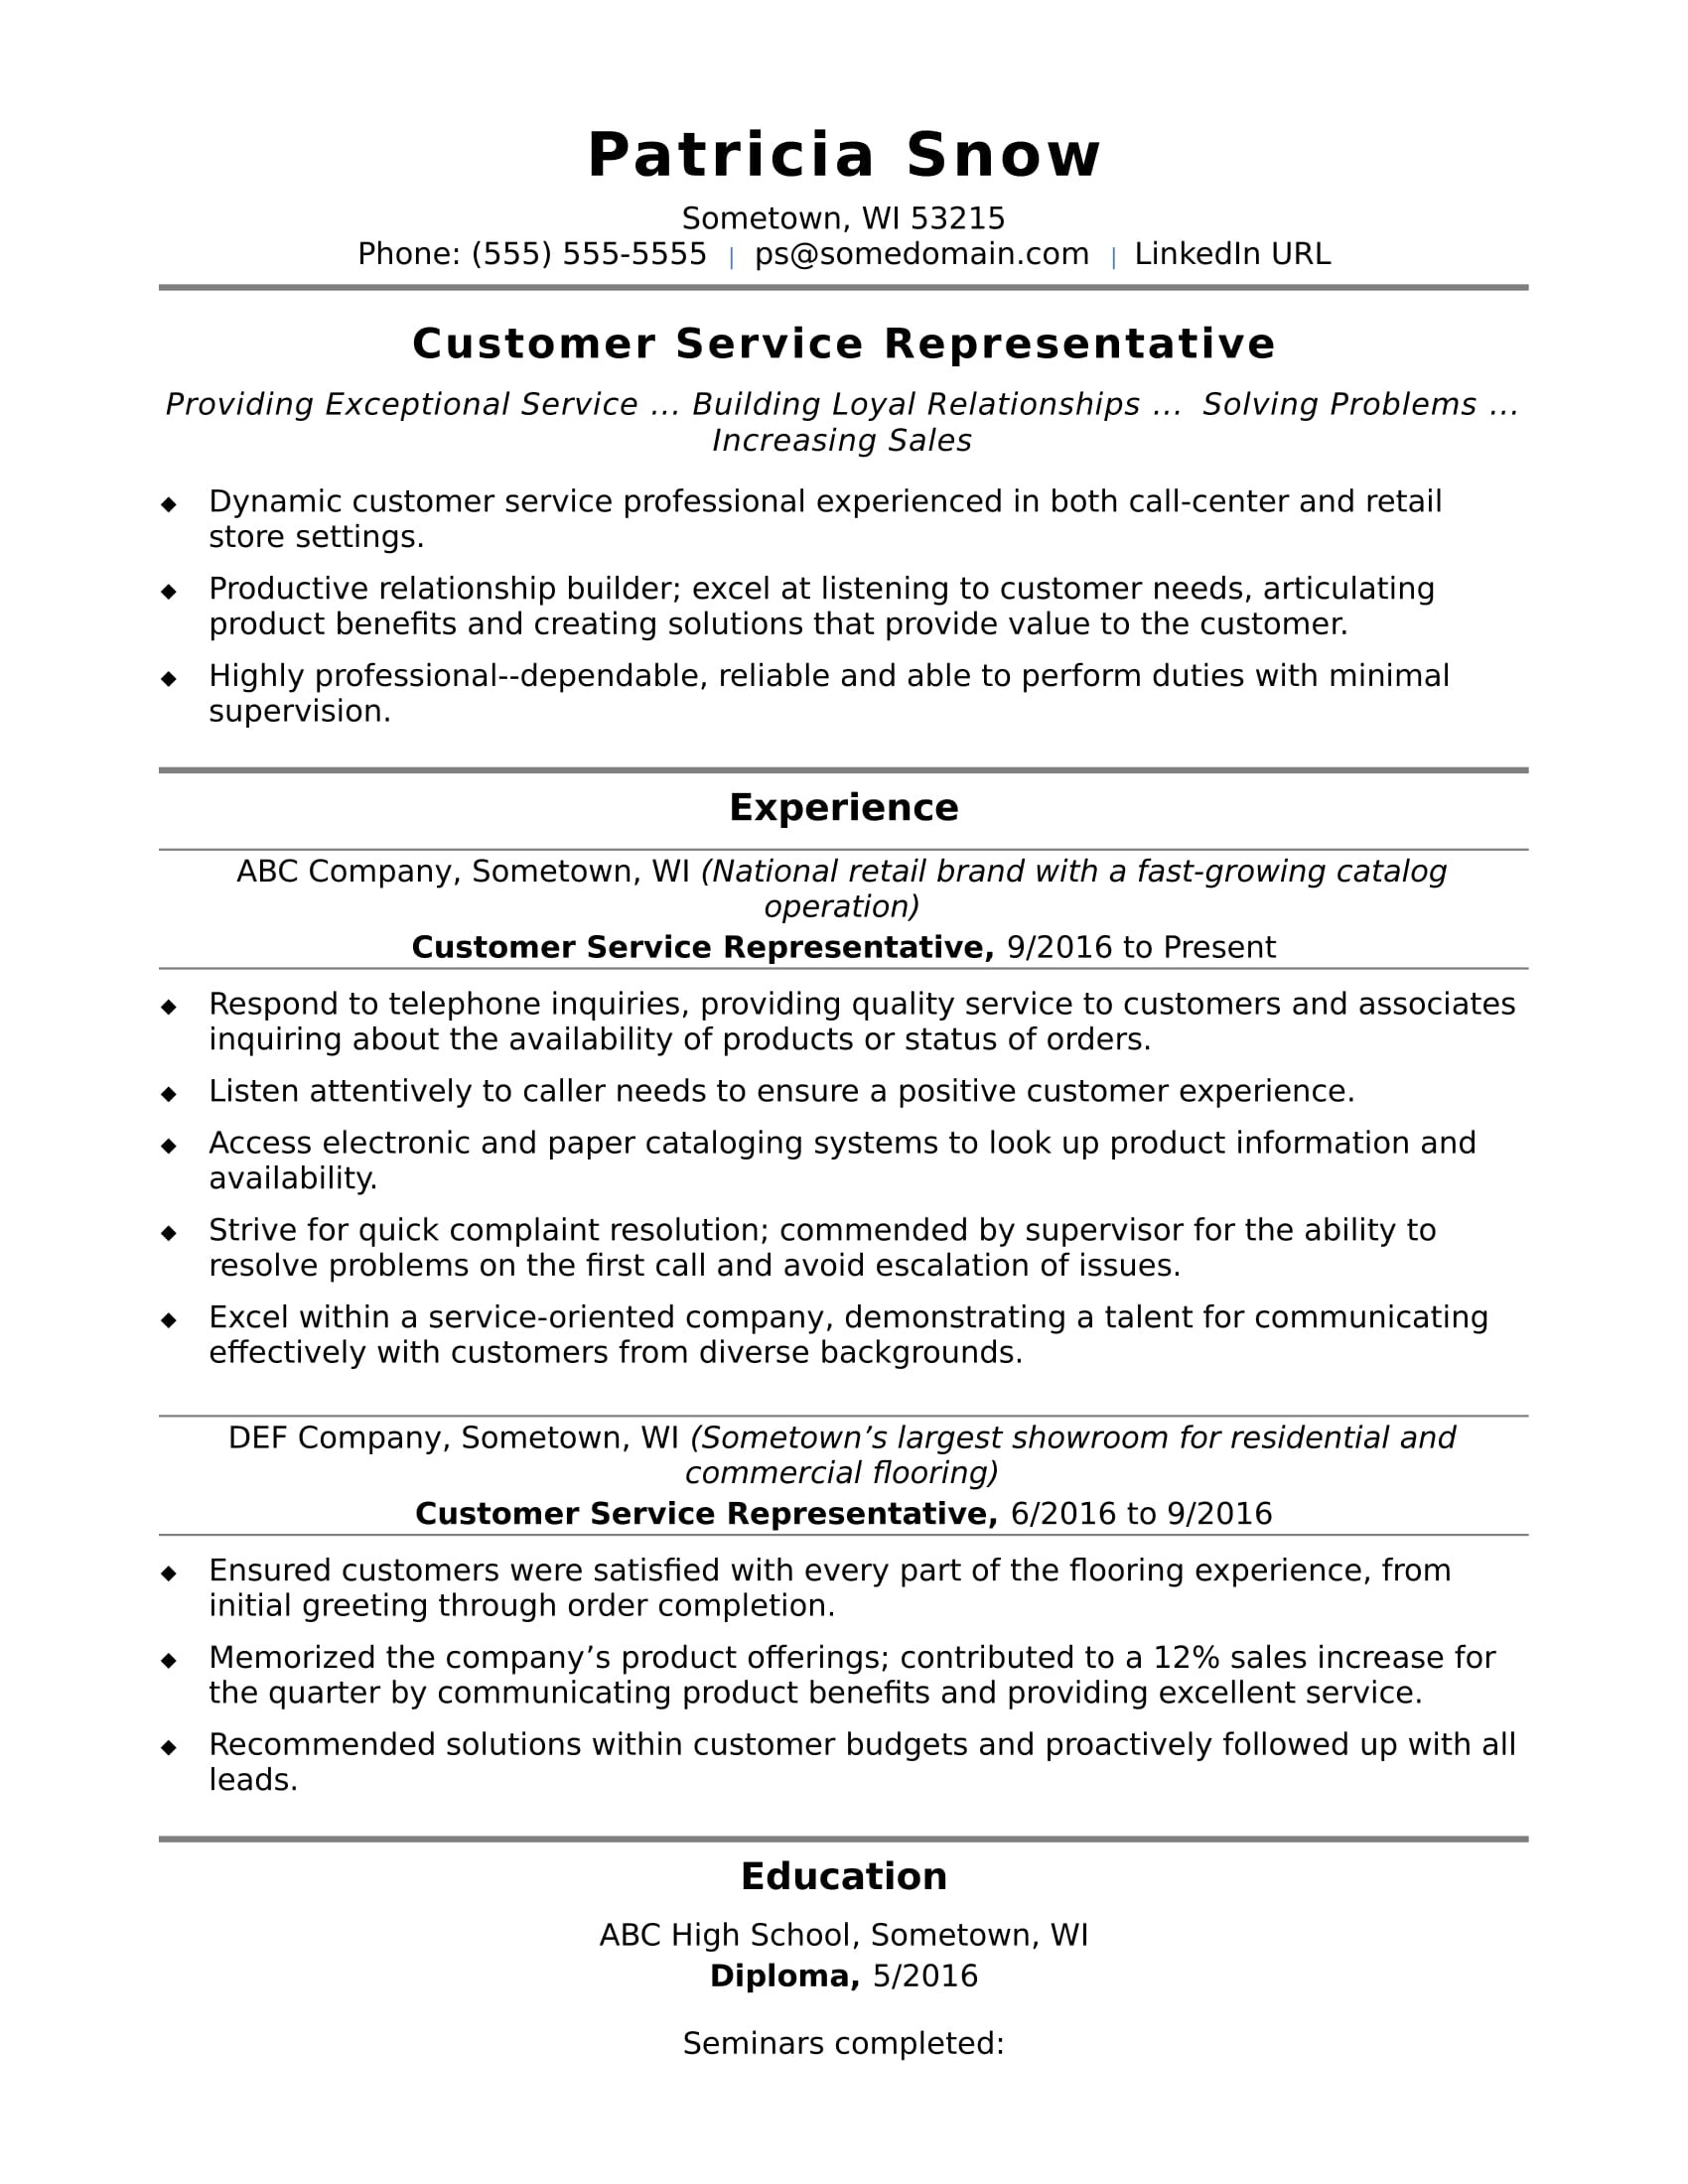 Sample Resume for Customer Service Jobs Customer Service Representative Resume Sample Monster.com